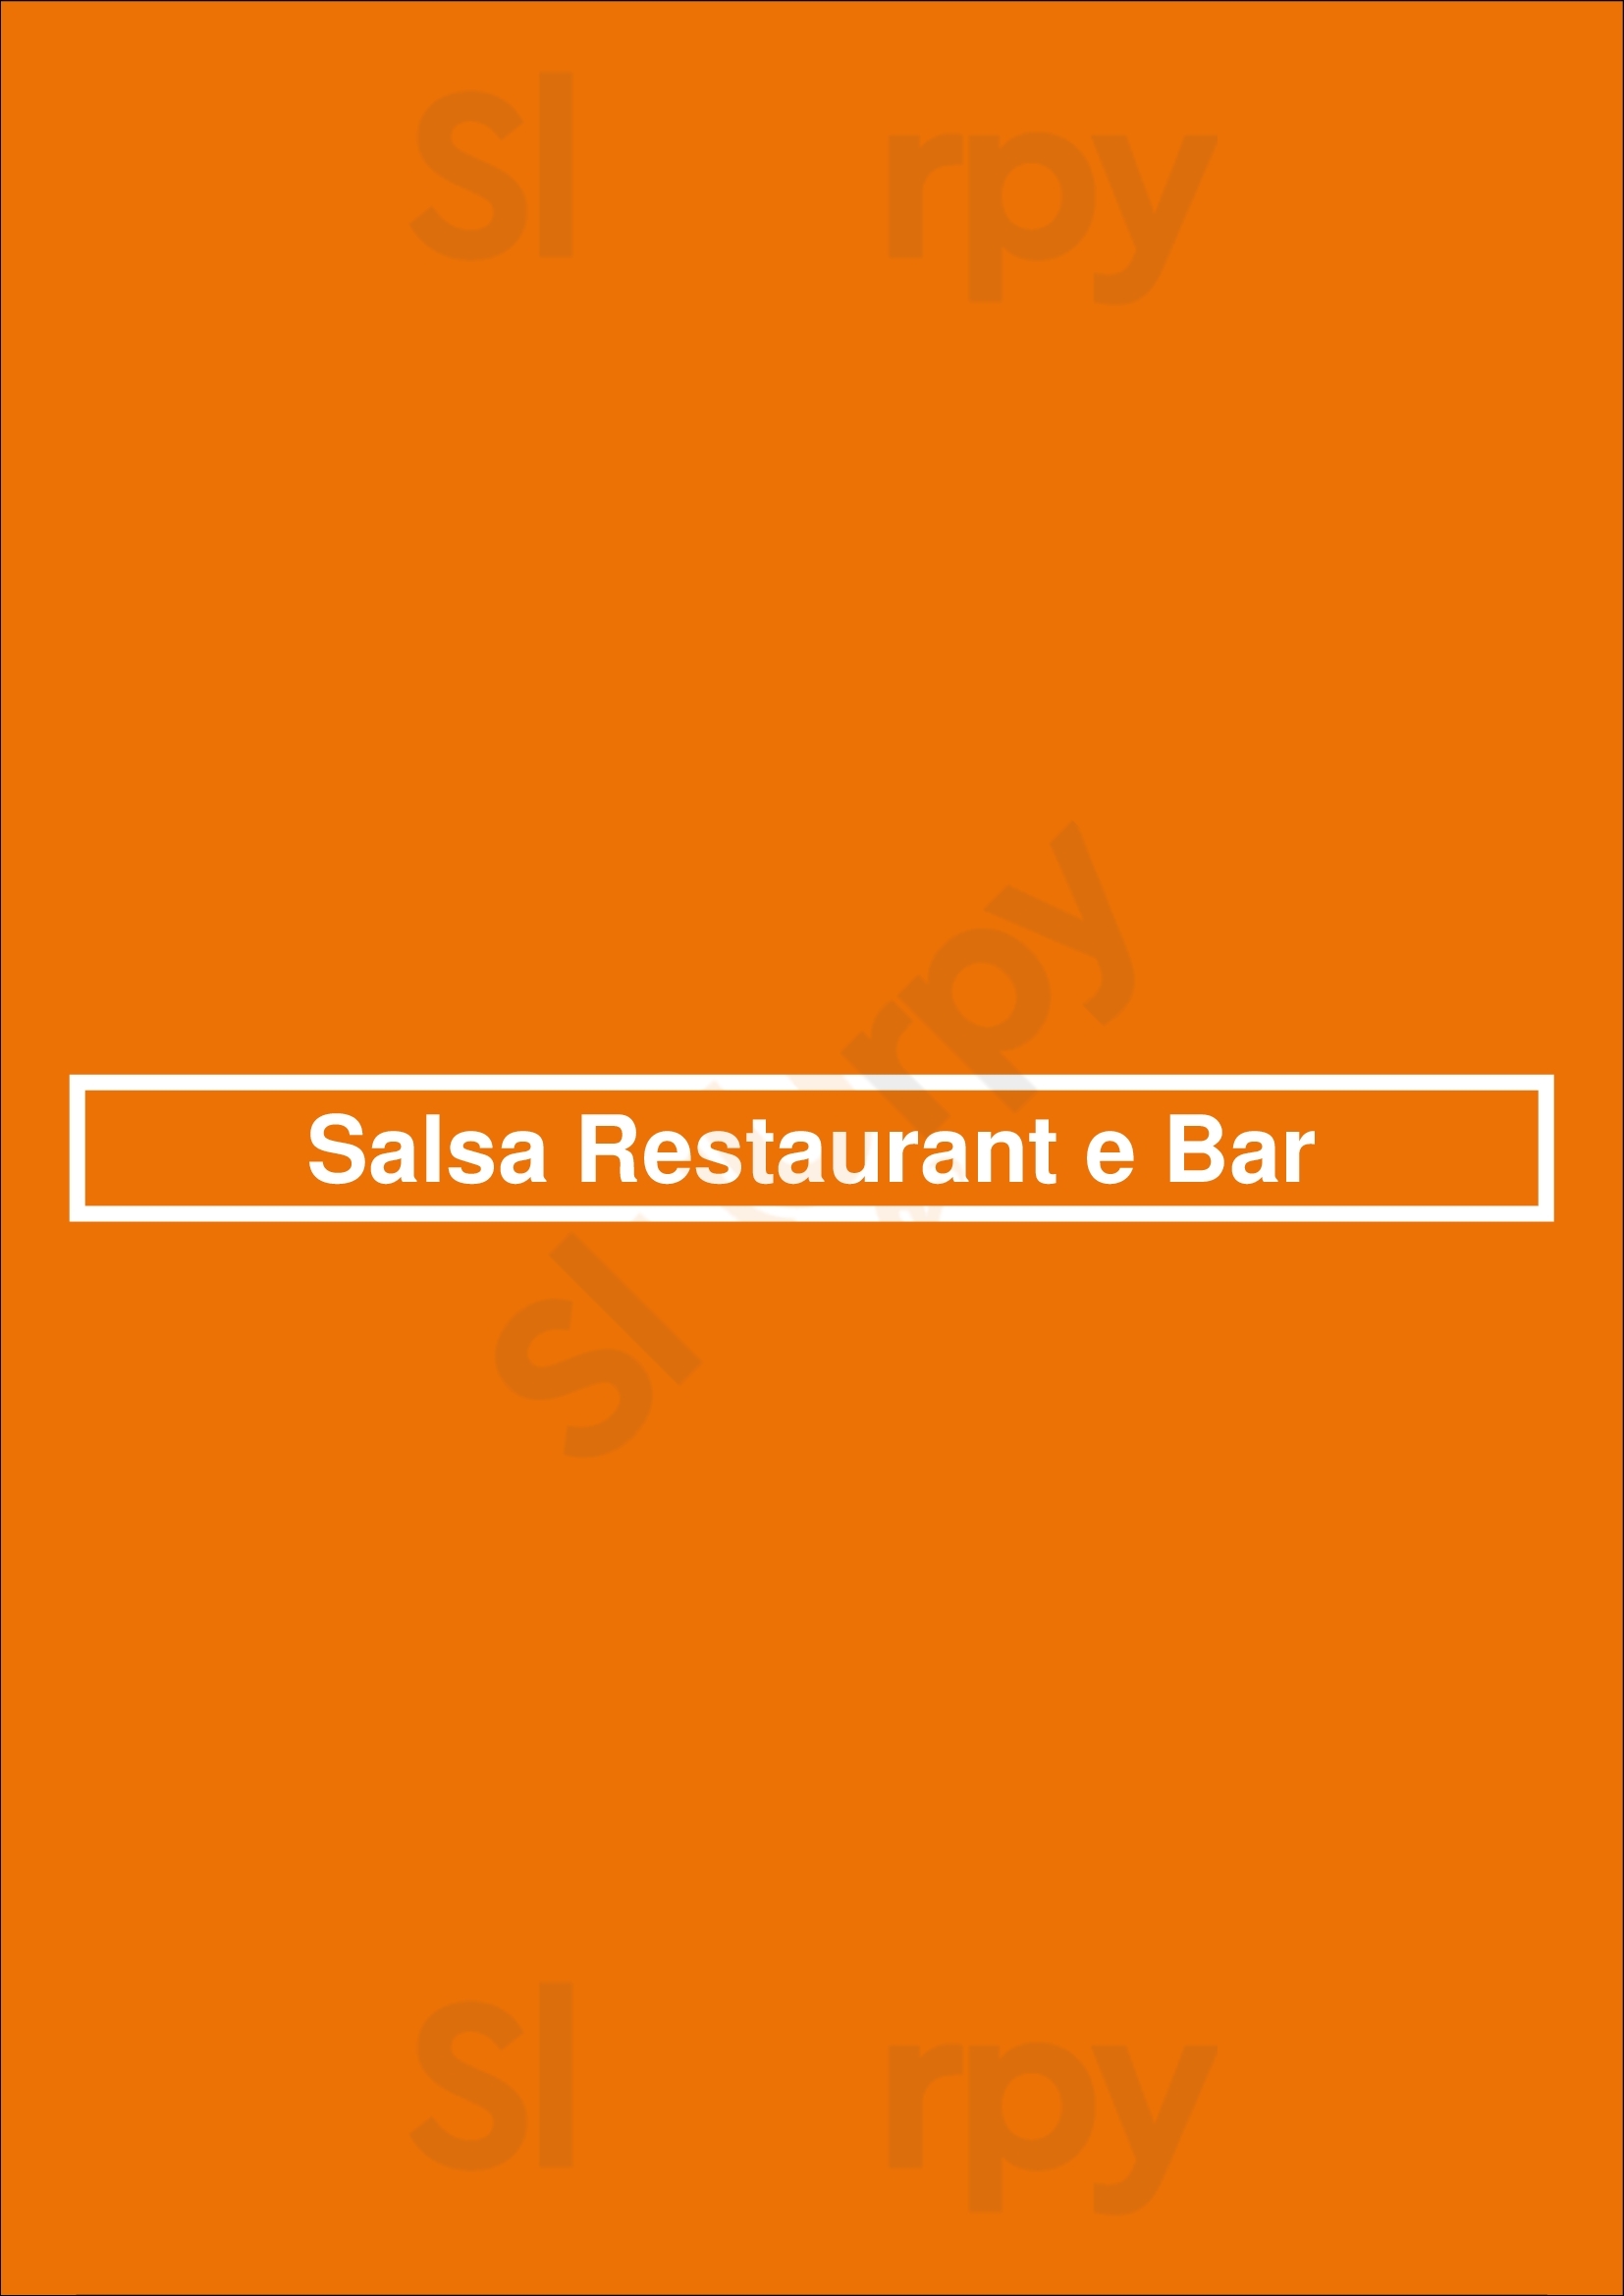 Salsa Restaurant E Bar Lisboa Menu - 1